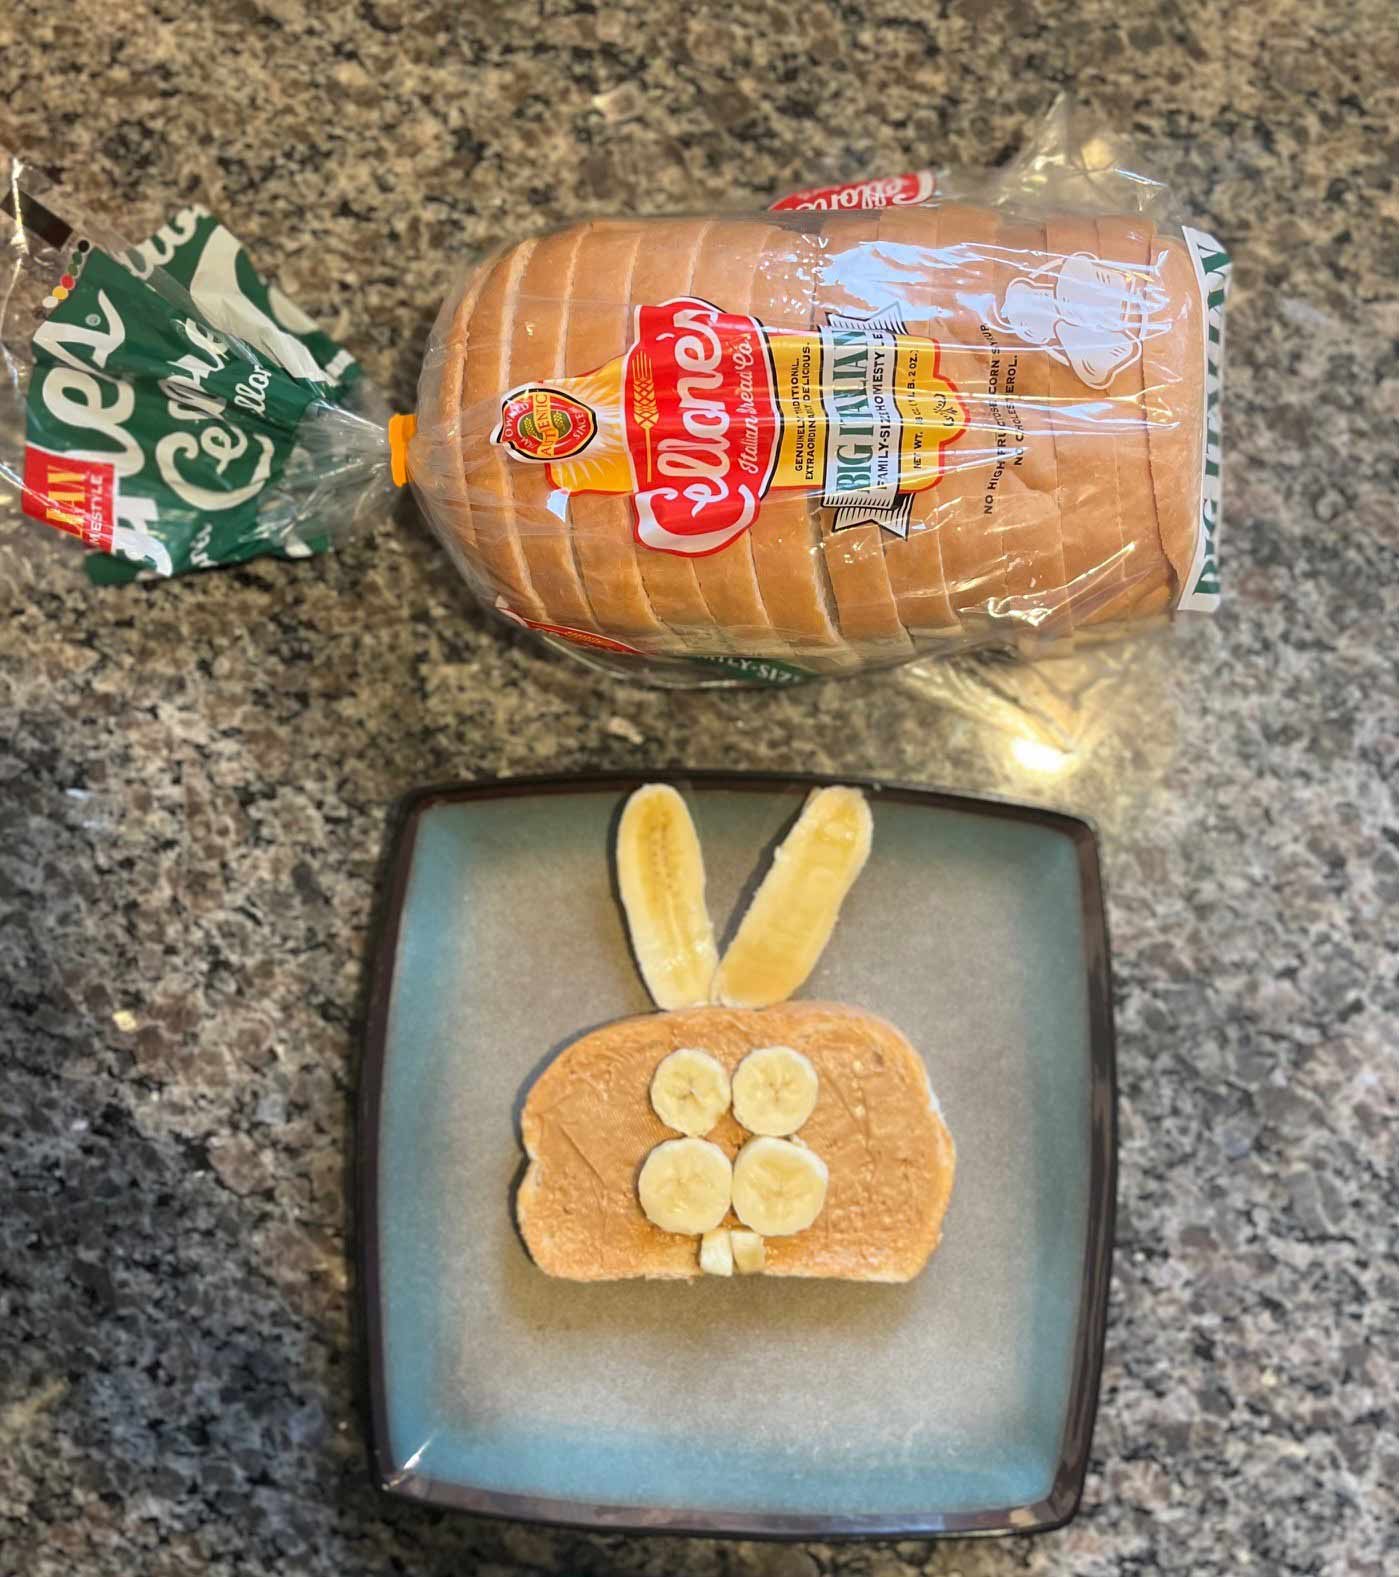 Bread with two banana wheels and bunny ears and bunny teeth